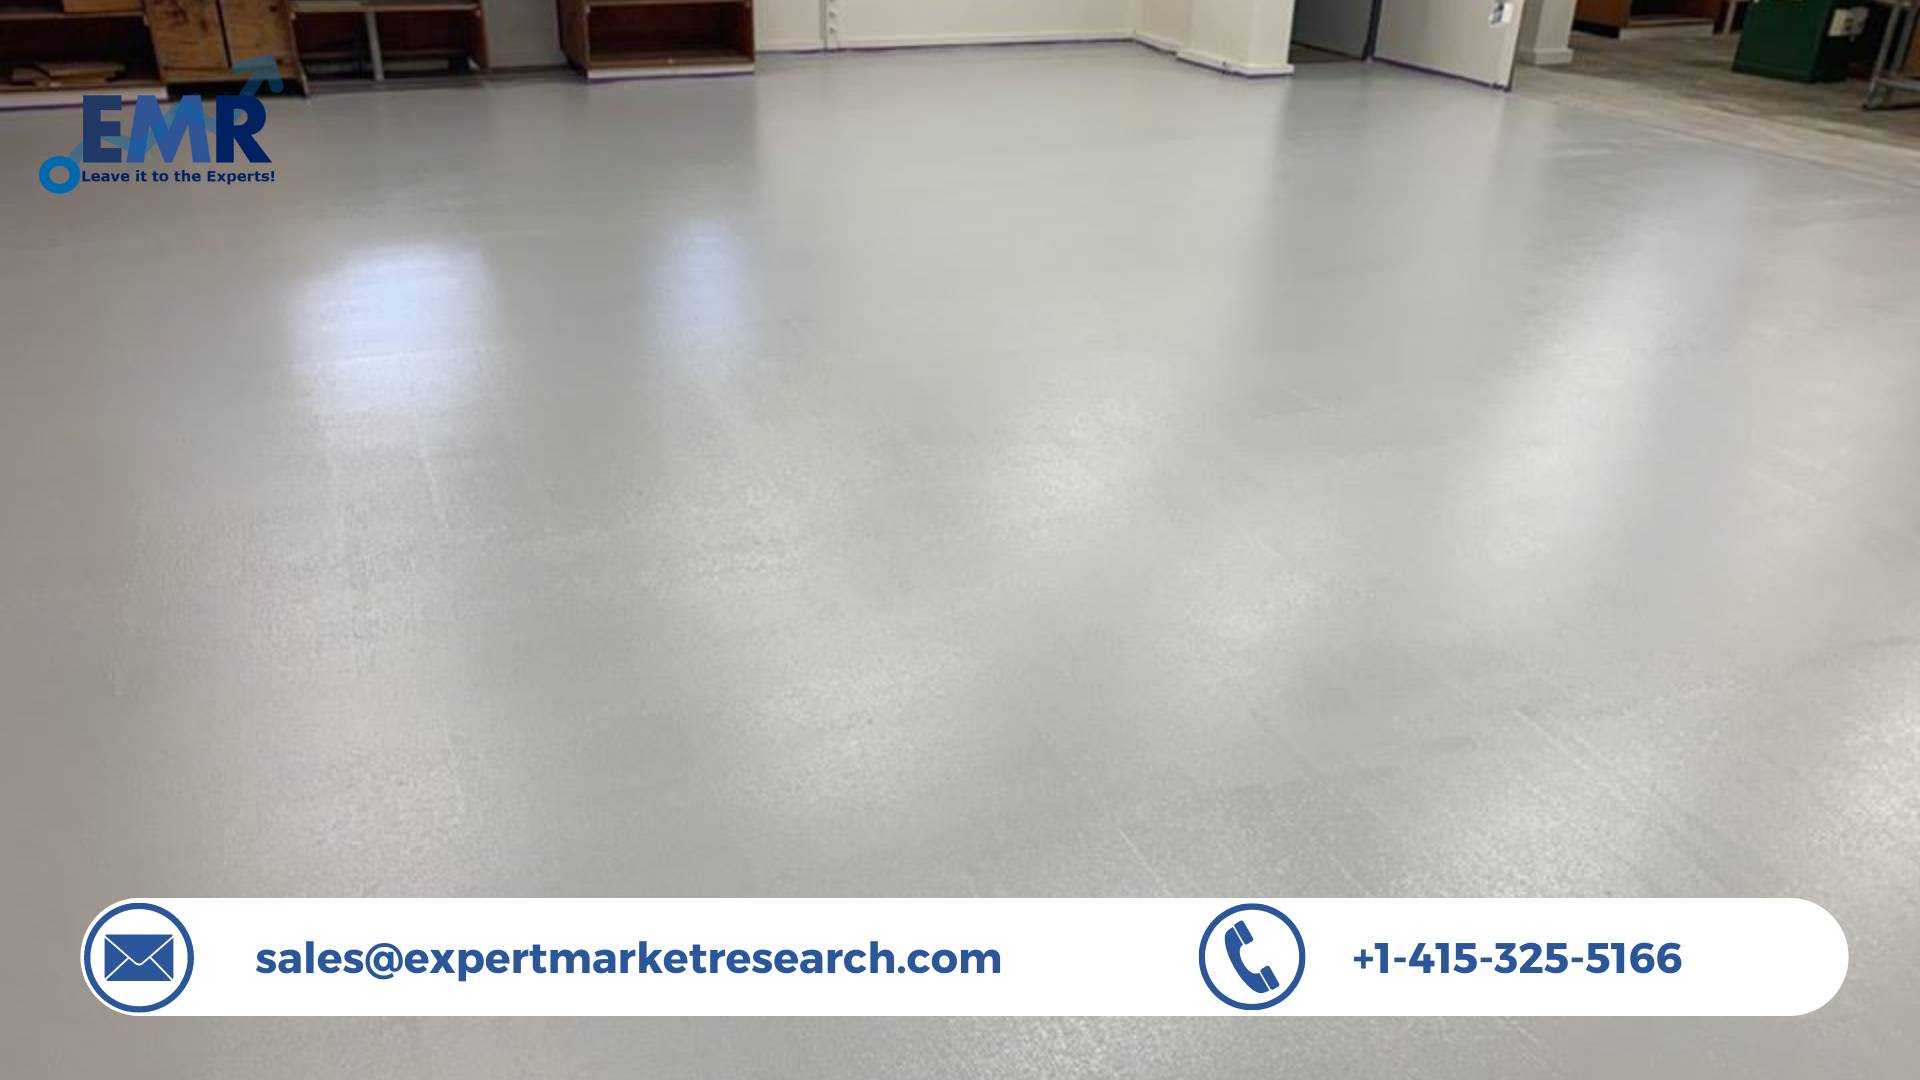 Concrete Floor Coatings Market Analysis